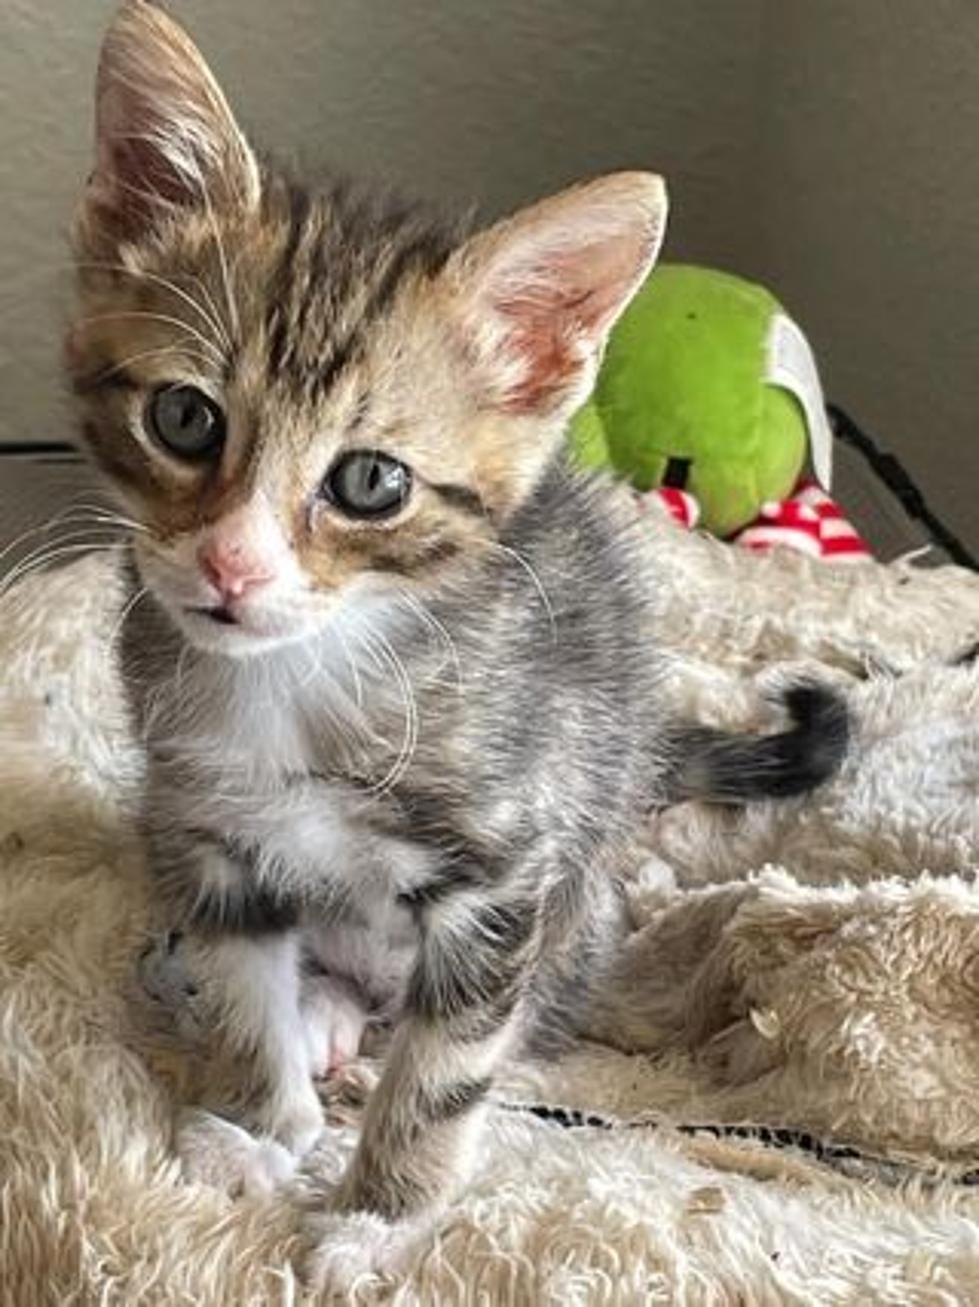 Celebrating Kittens with KISSFM Listeners’ Cute Fur Baby Photos